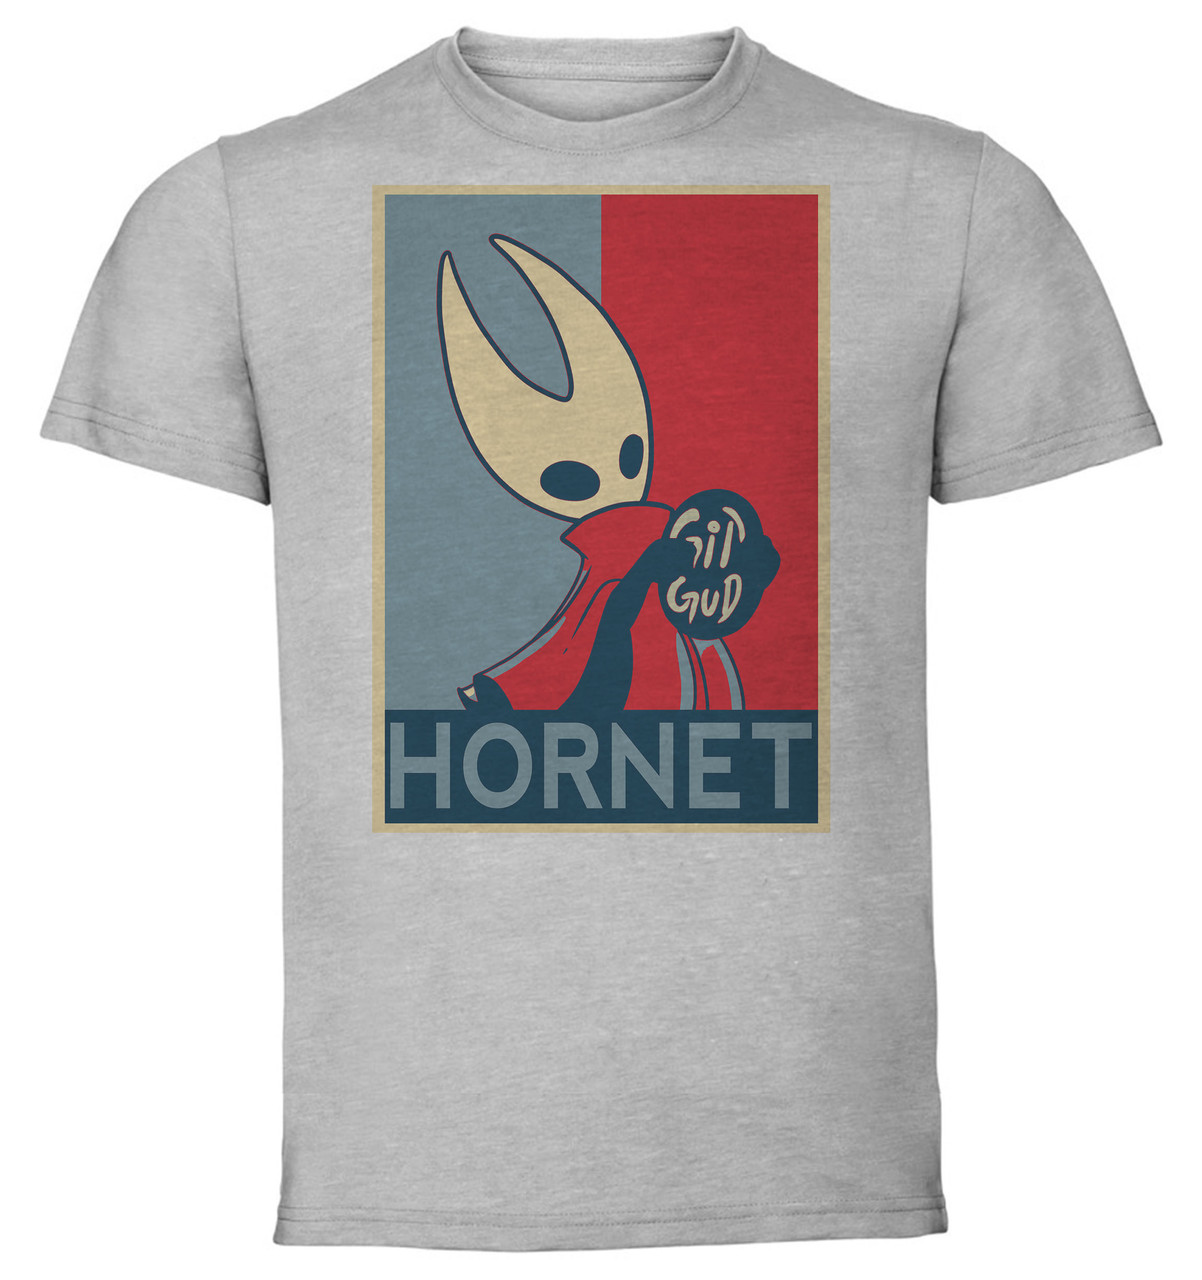 T-Shirt Unisex - Grey - Propaganda - Hollow Knight Hornet variant git gud